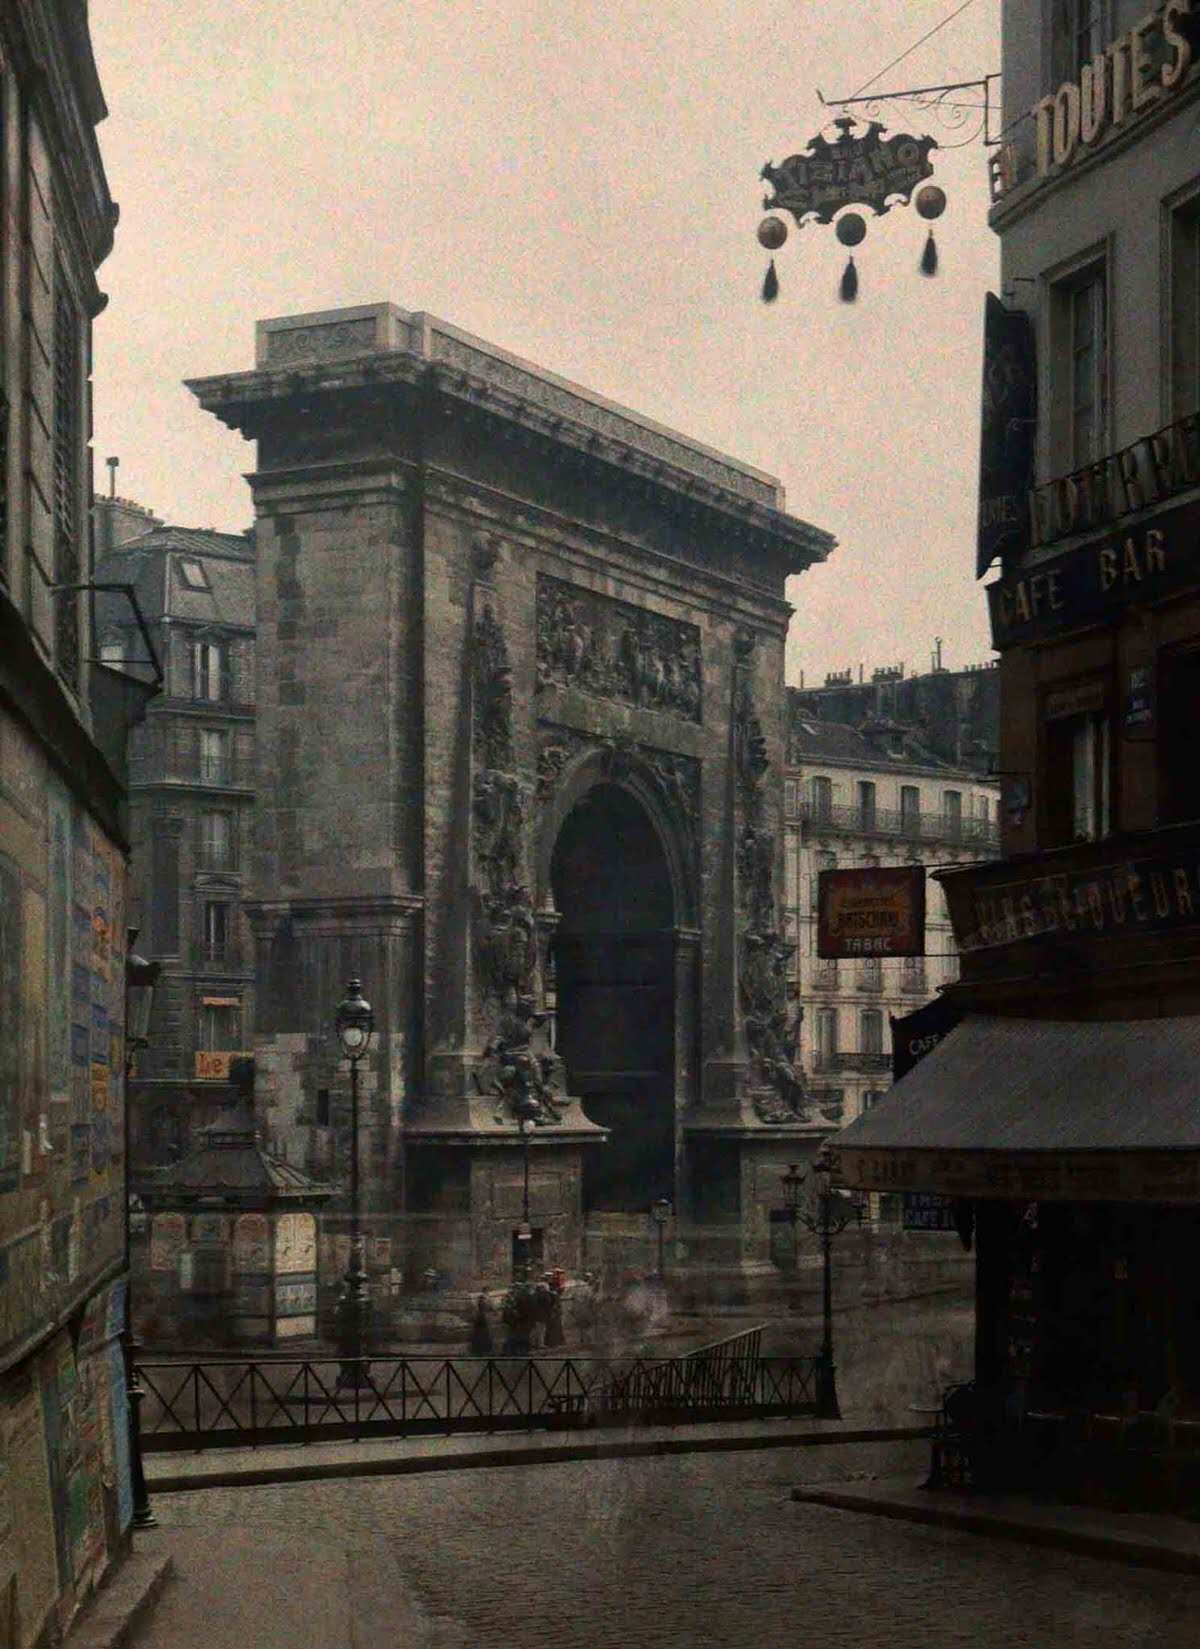 The Porte Saint-Denis.